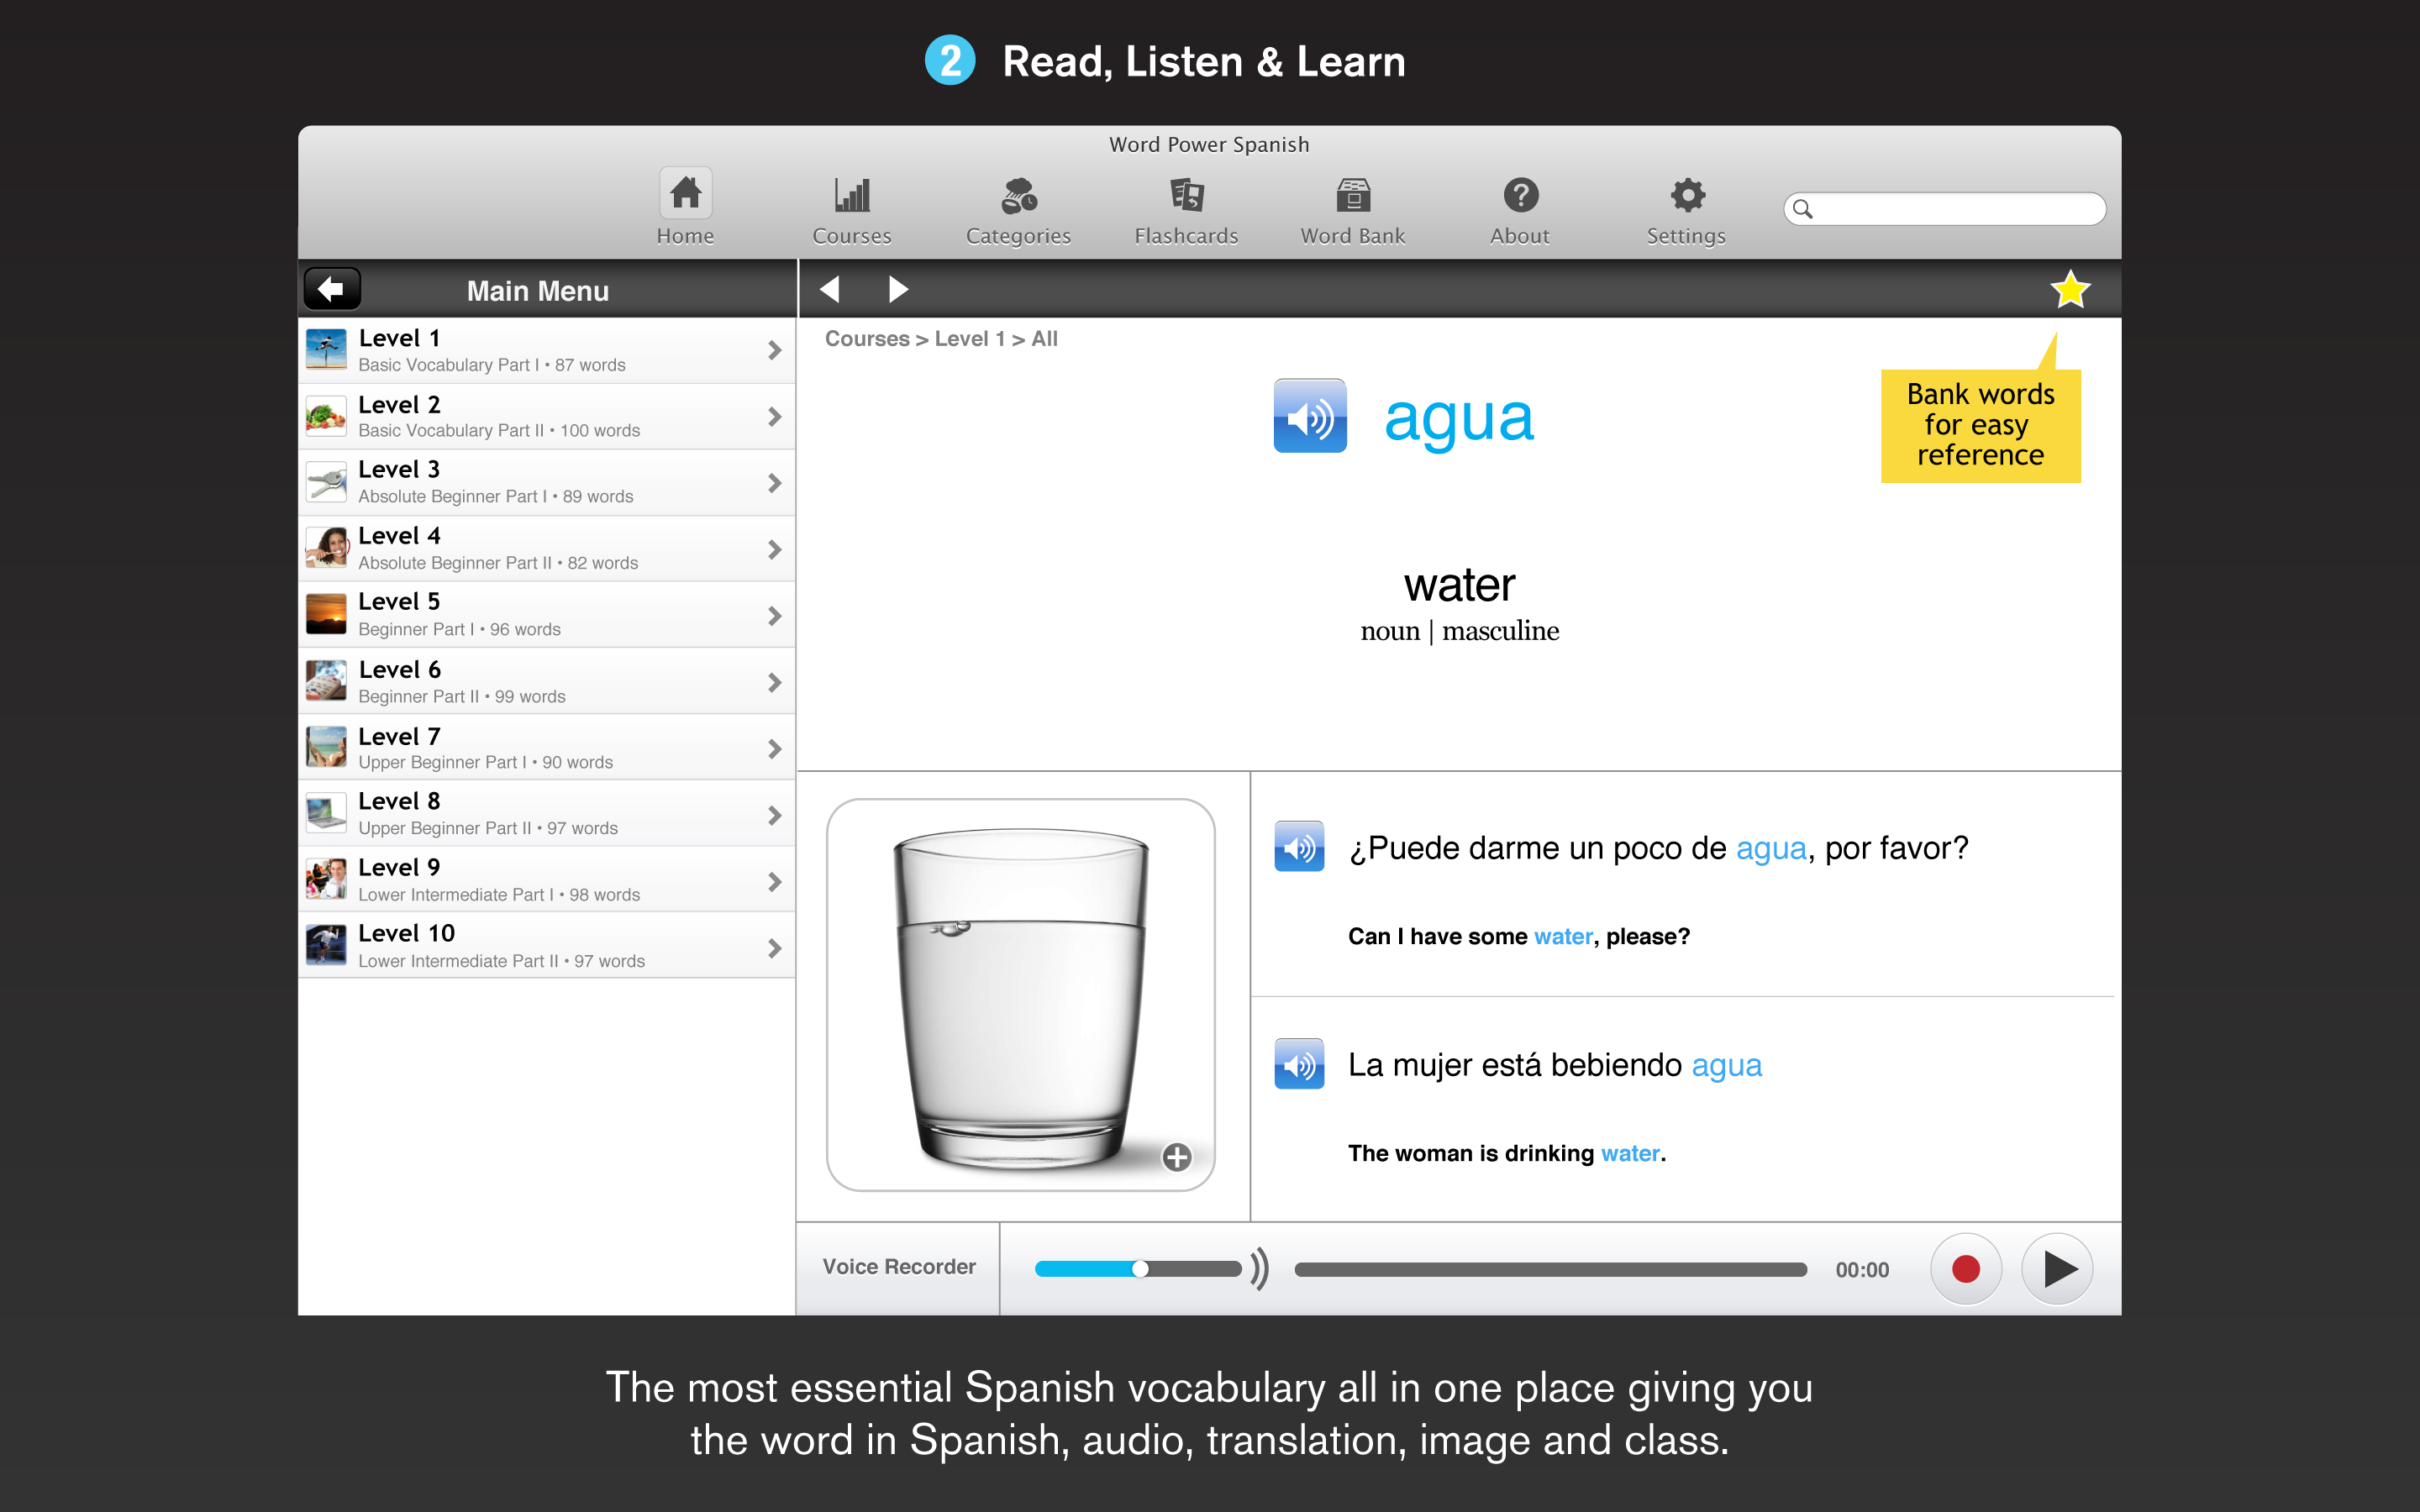 Screenshot 2 - Learn Spanish - Gengo WordPower 